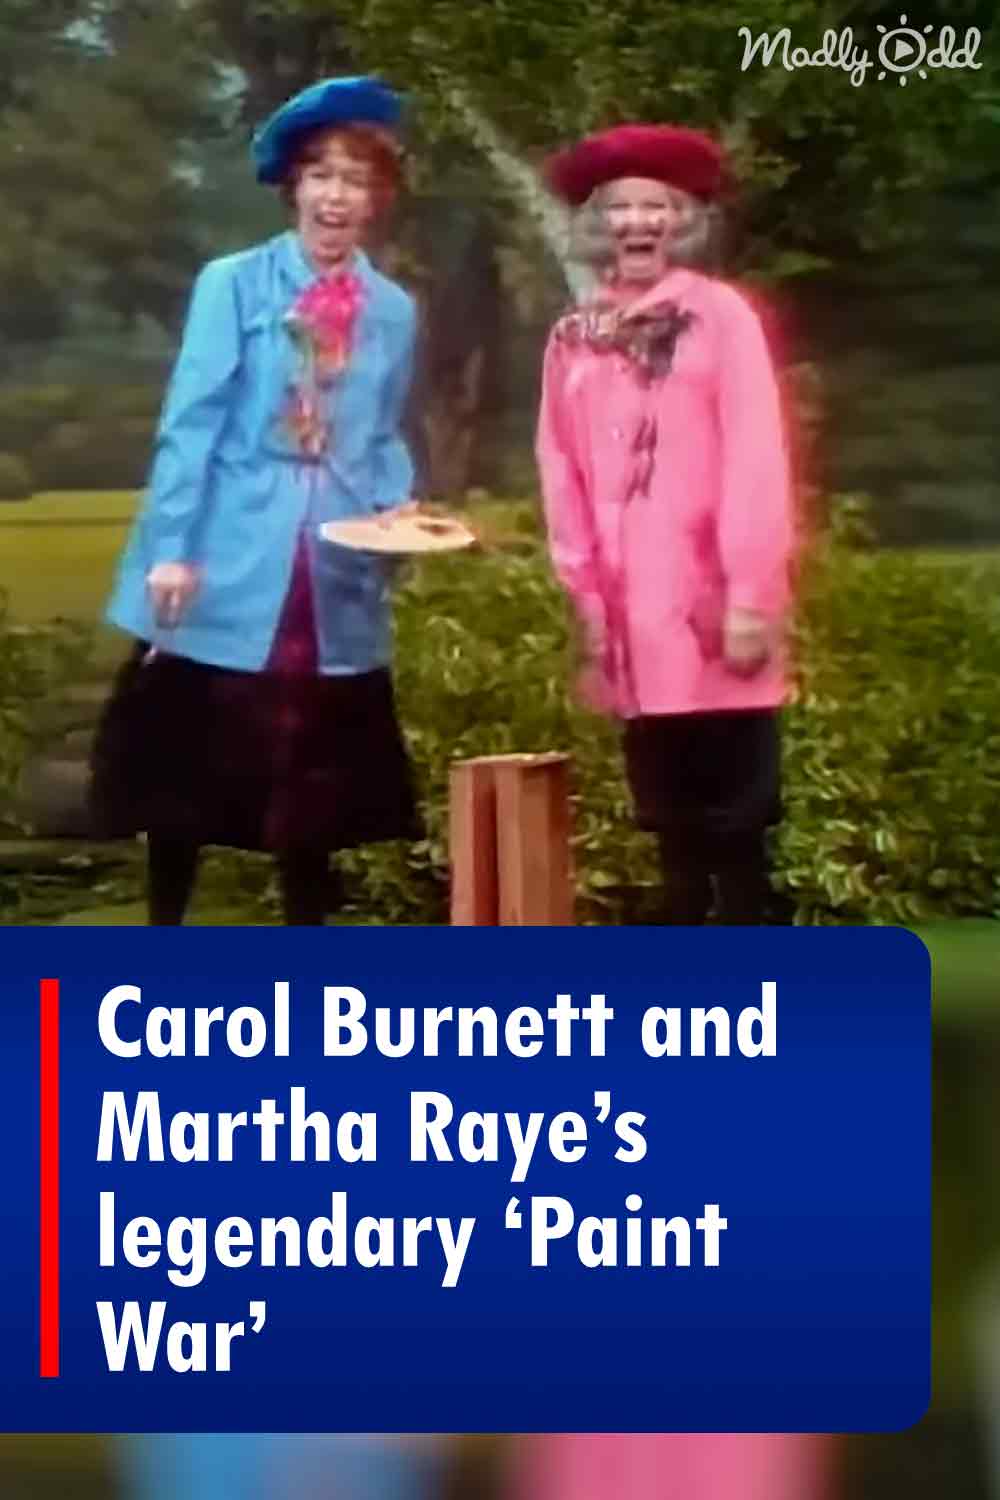 Carol Burnett and Martha Raye’s legendary ‘Paint War’